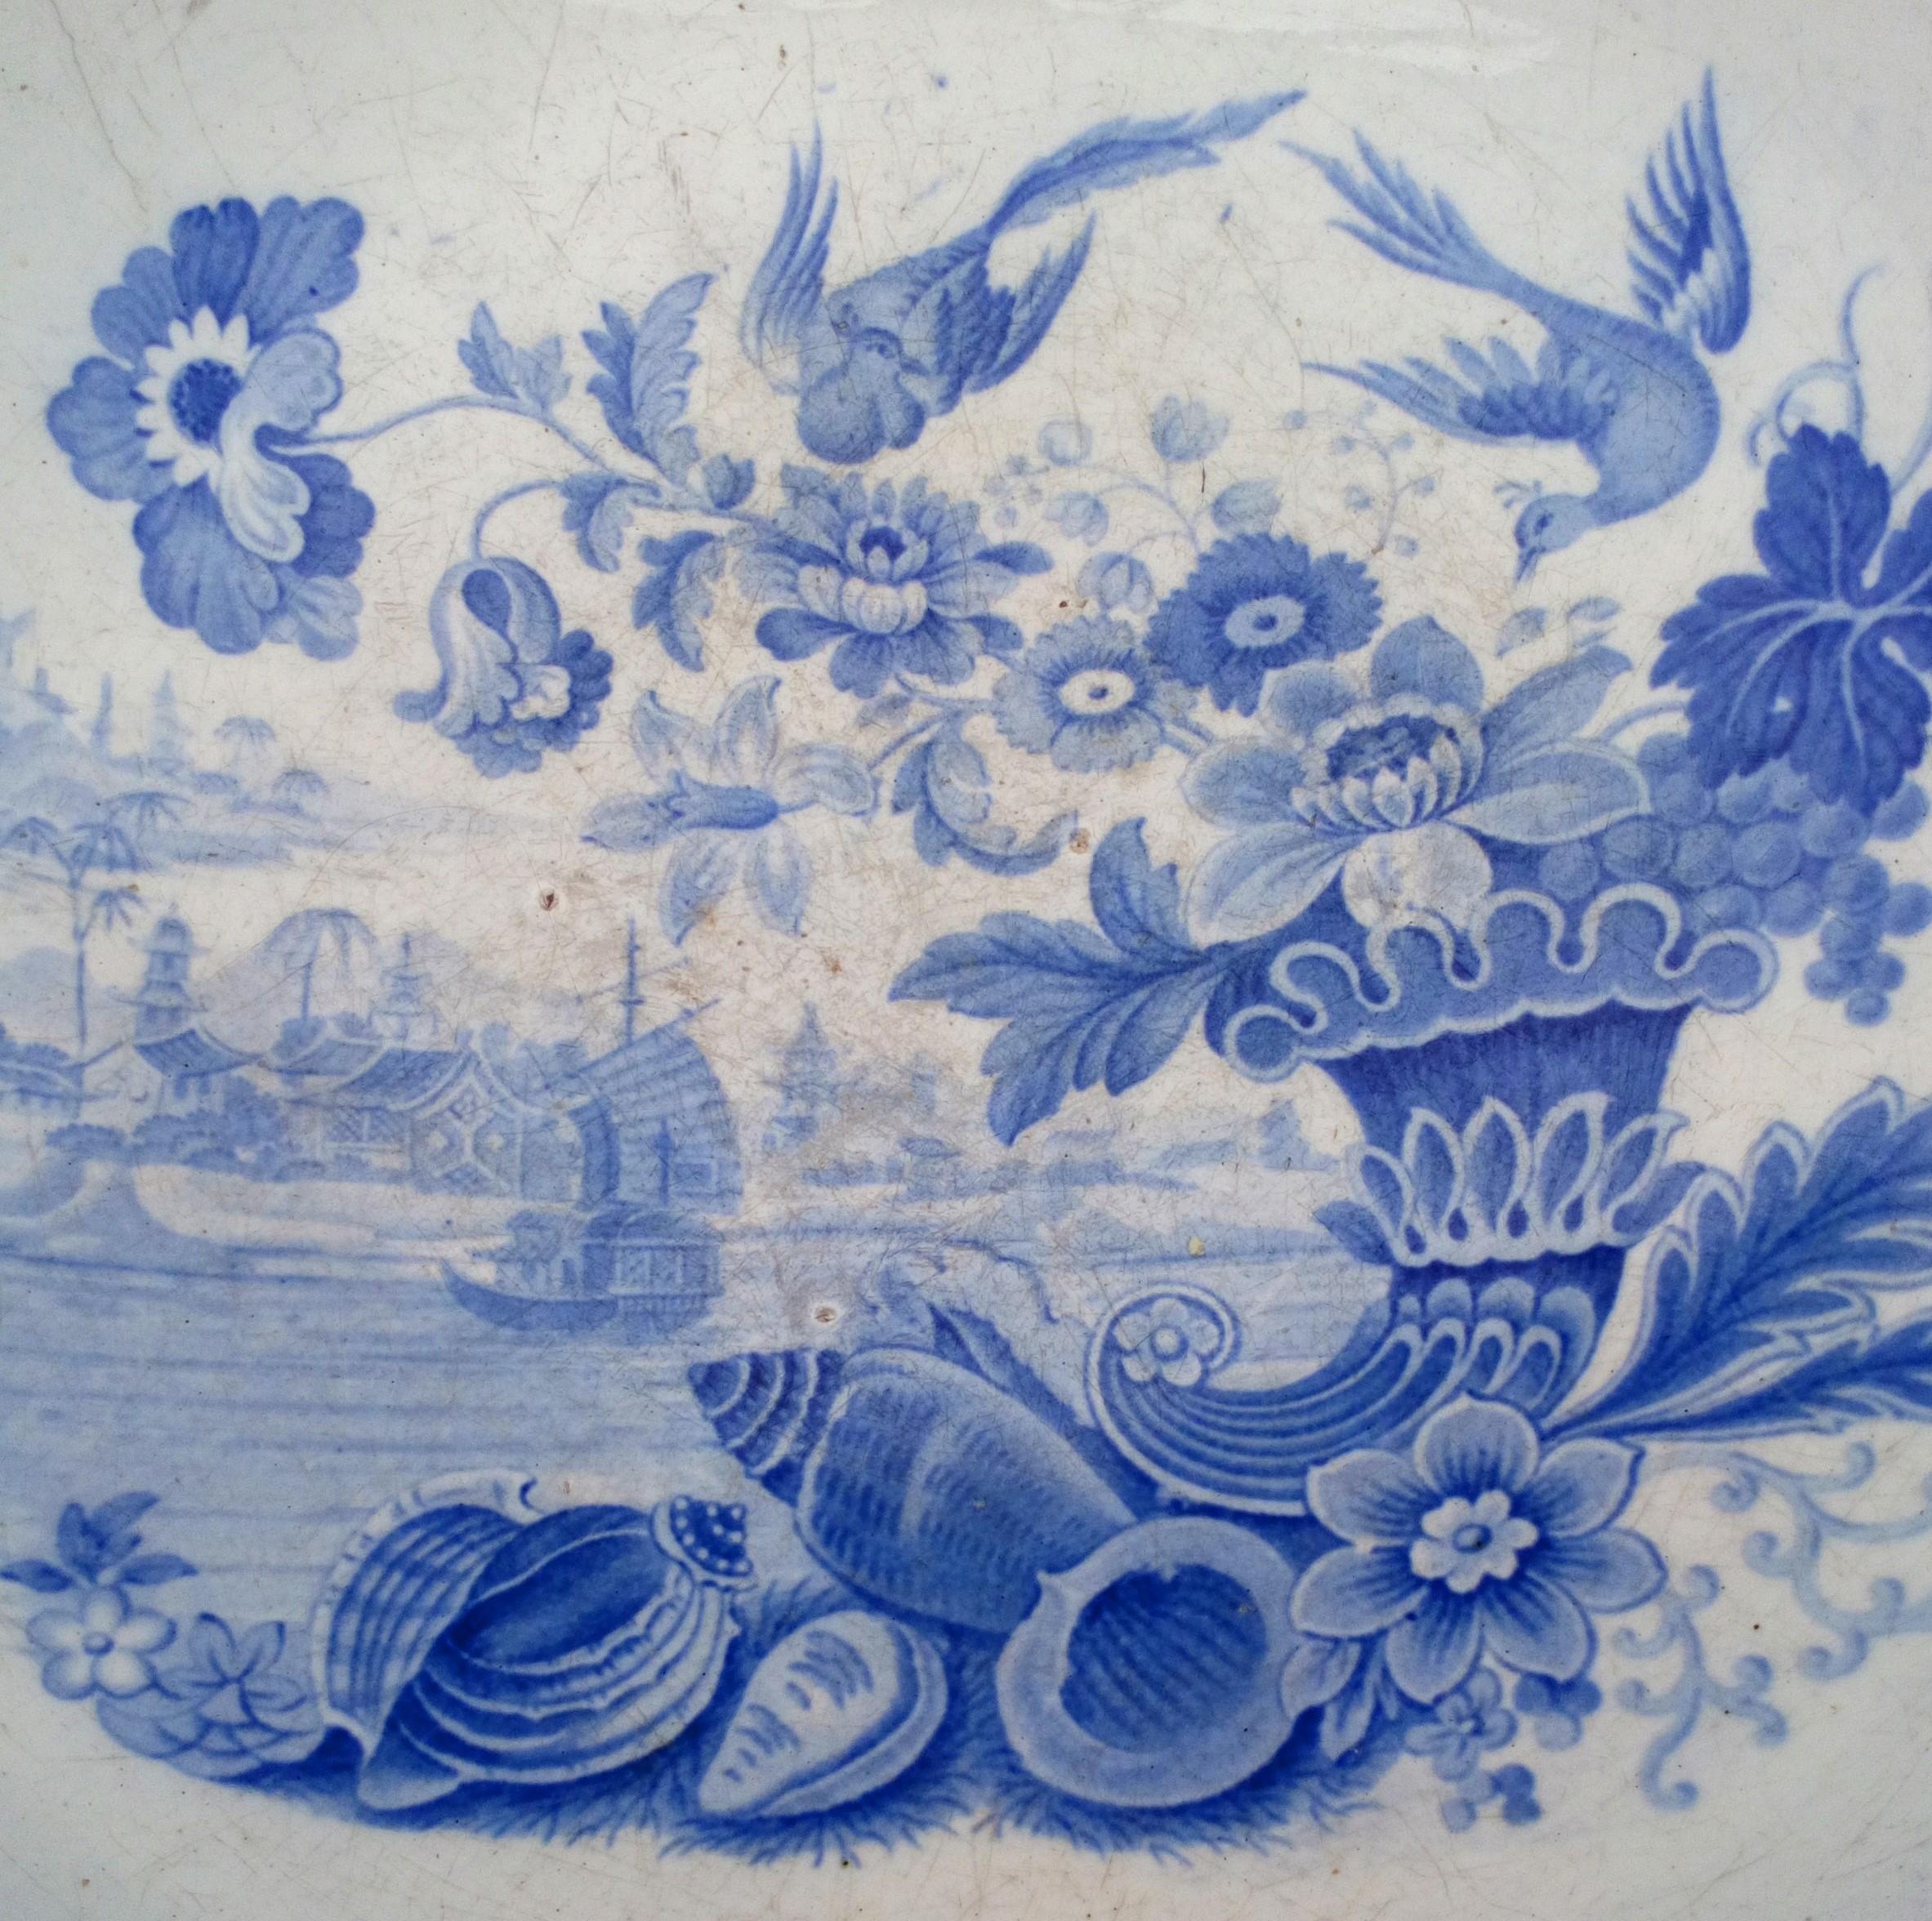 Antique Pearlware Punch Bowl Transfer Printed Oriental Shells Cornucopia Pattern circa 1825